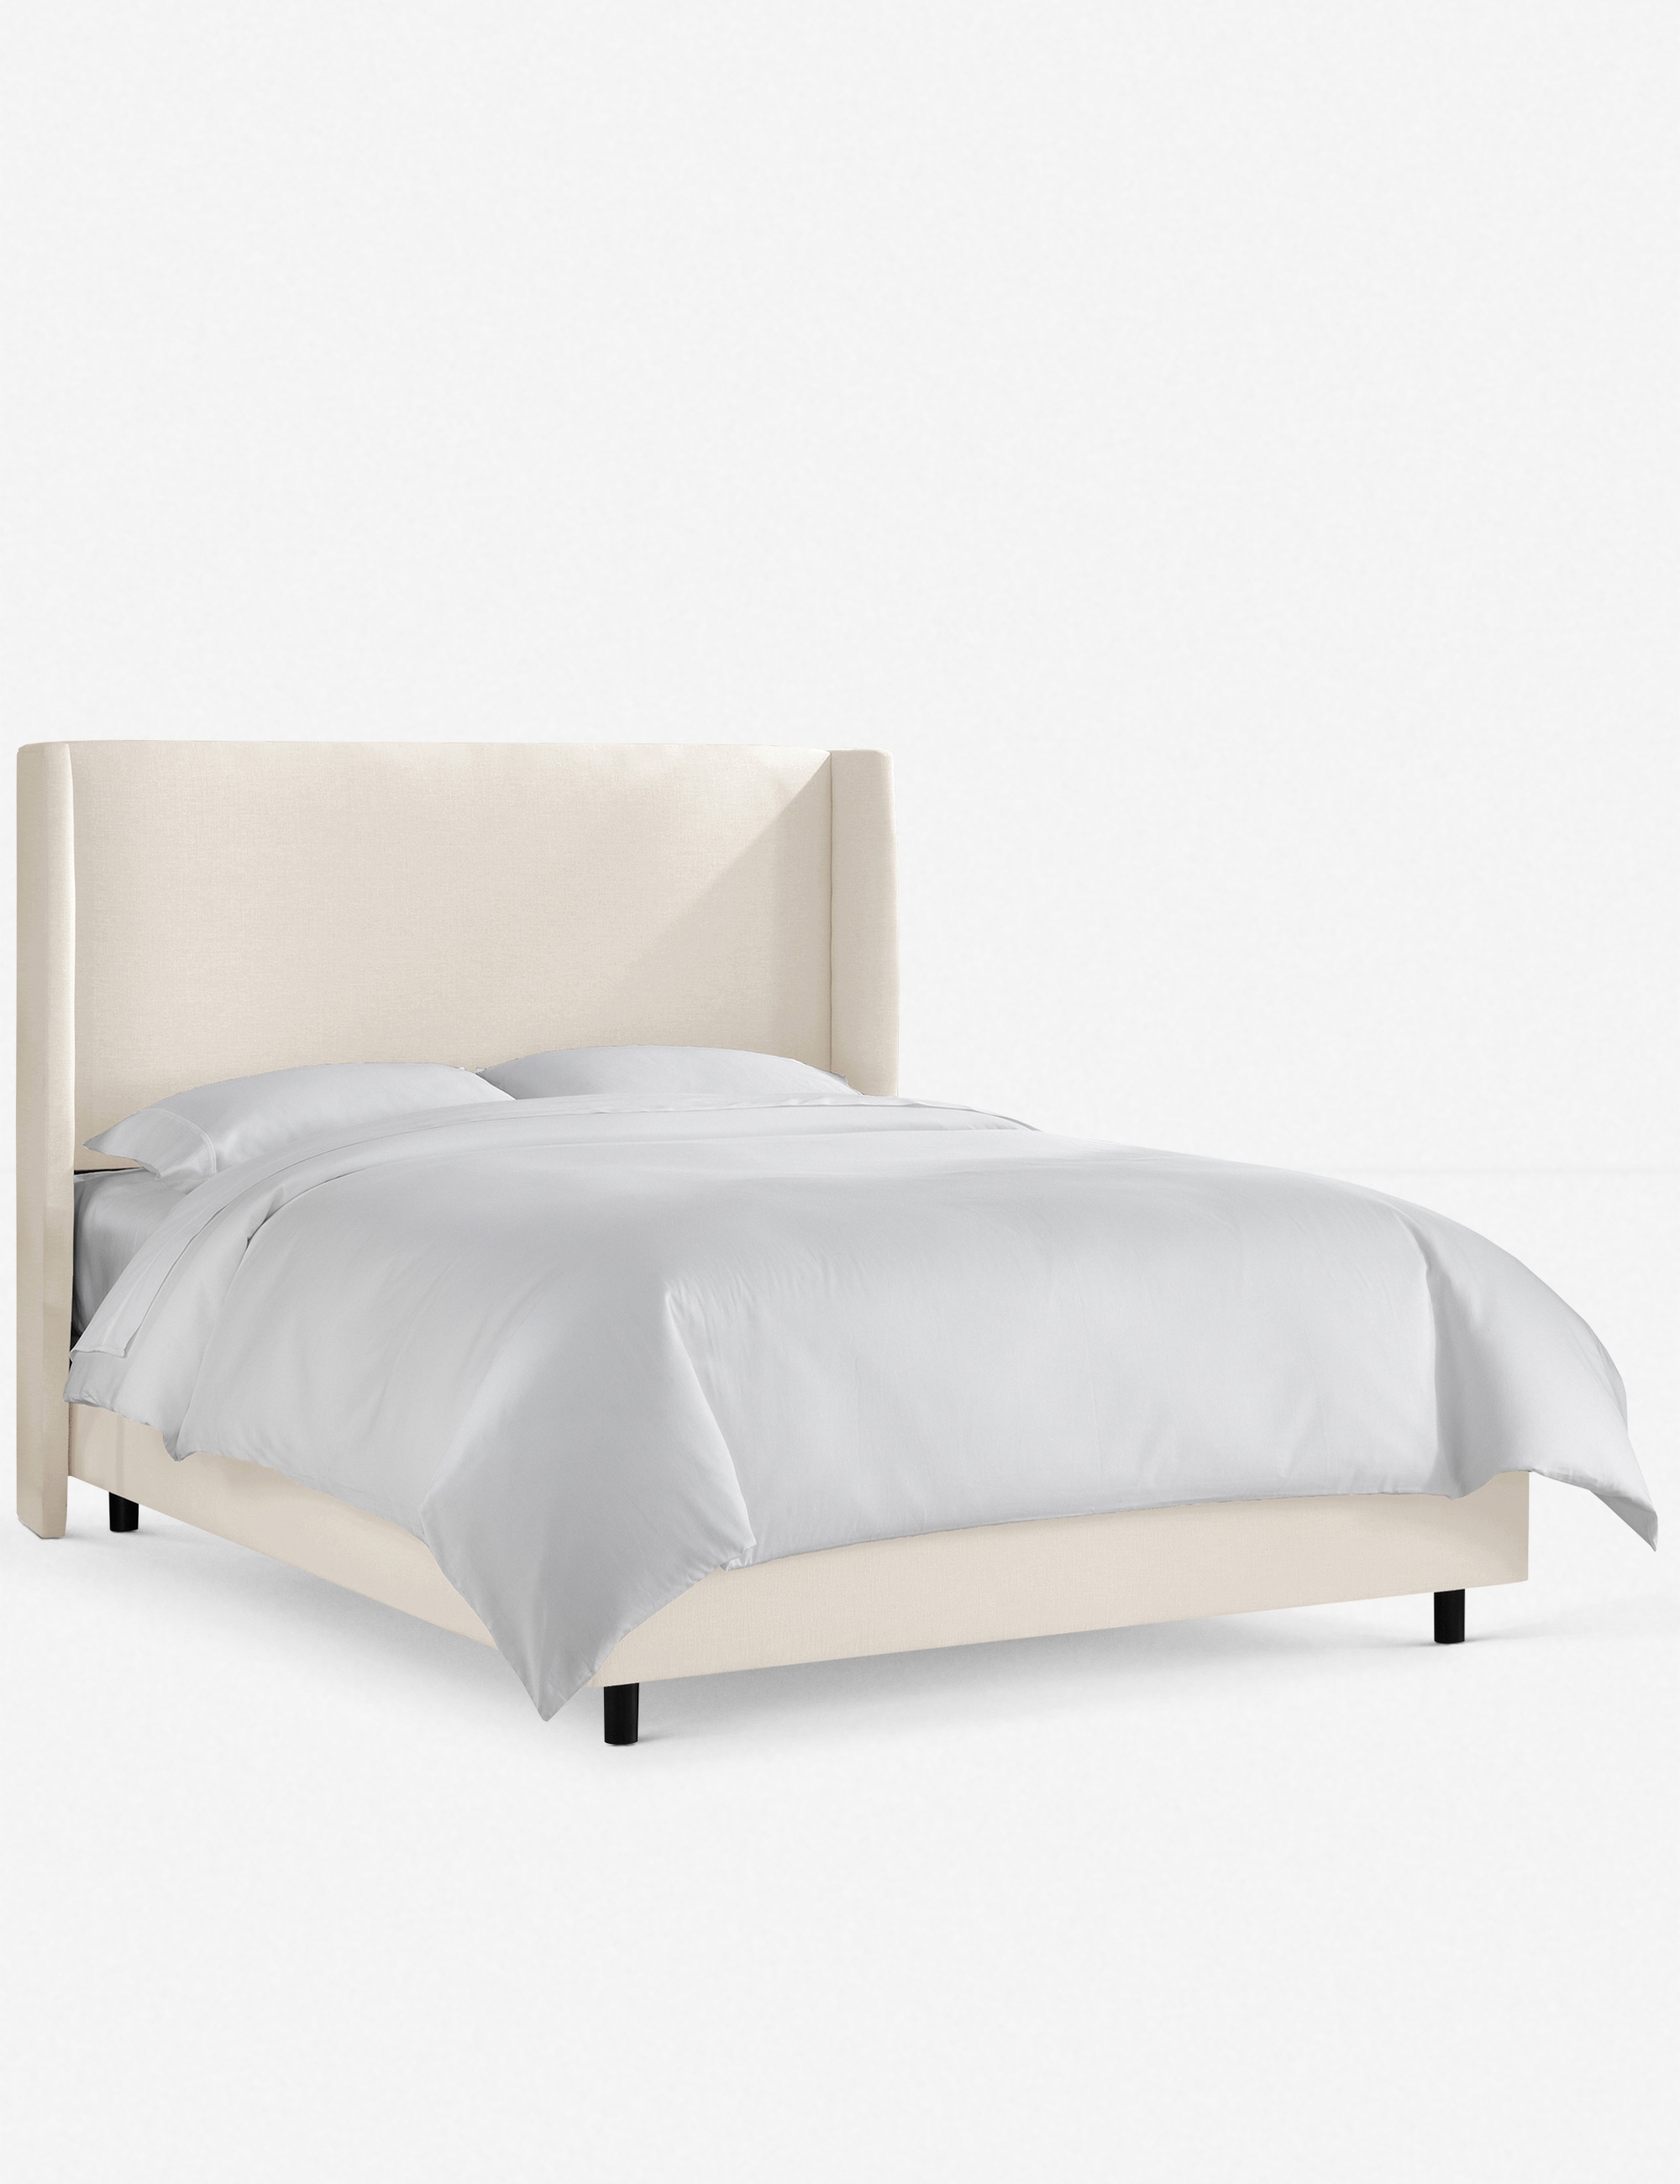 Adara Linen Bed, Talc Linen, California King - Image 0